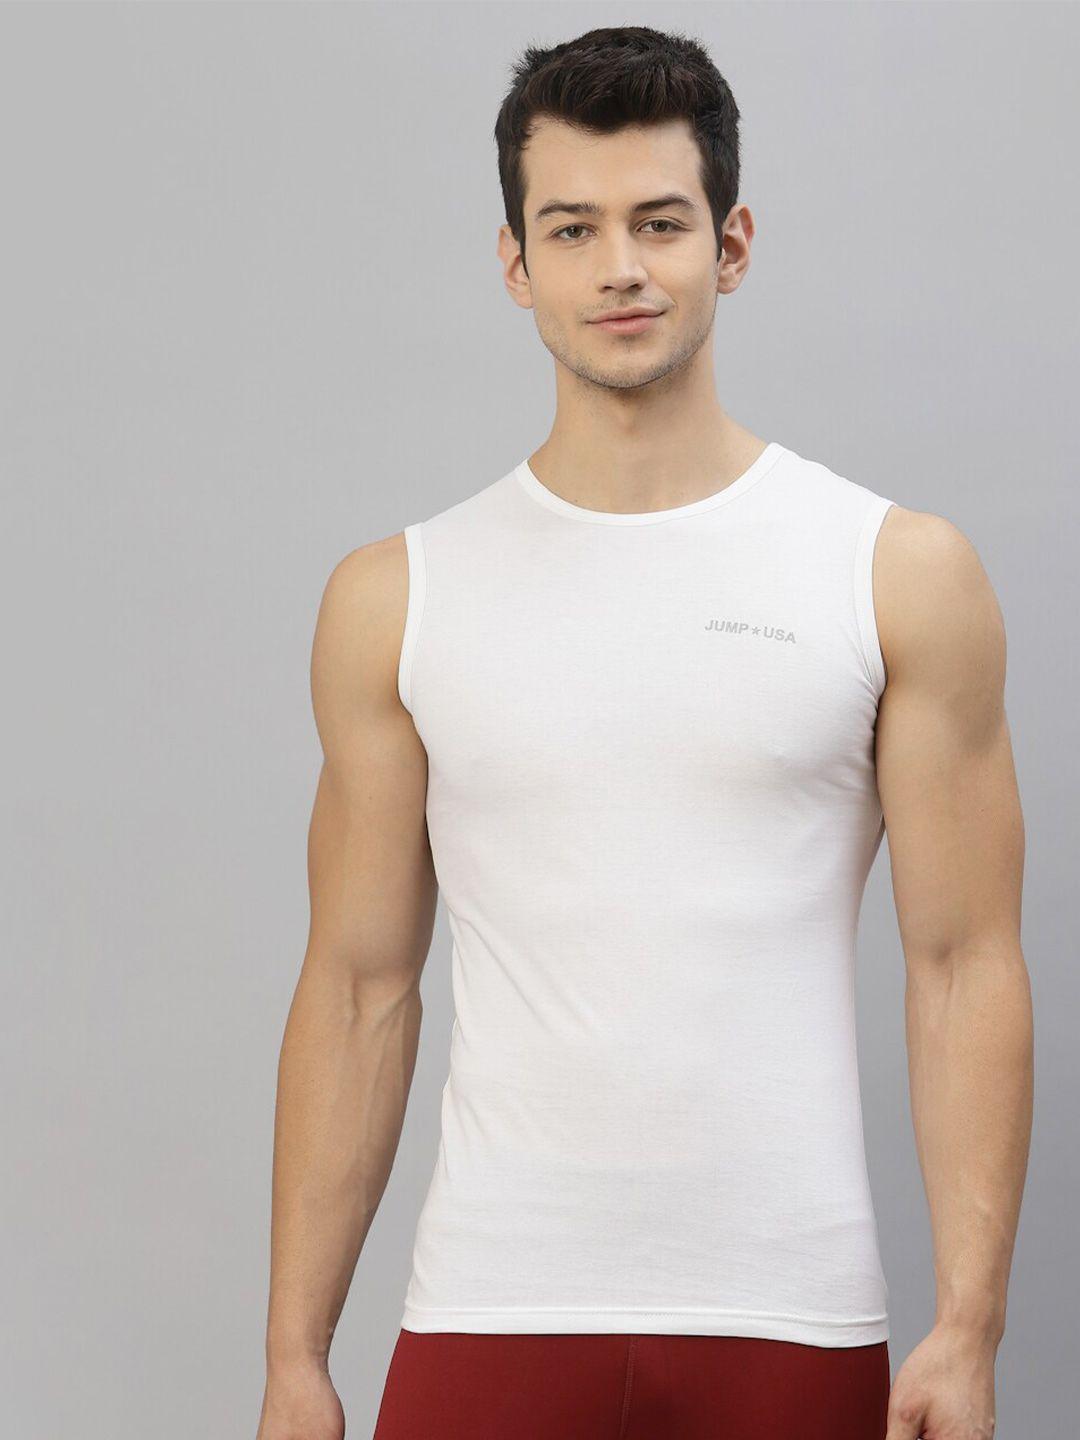 jump usa men white pure cotton sleeveless t-shirt